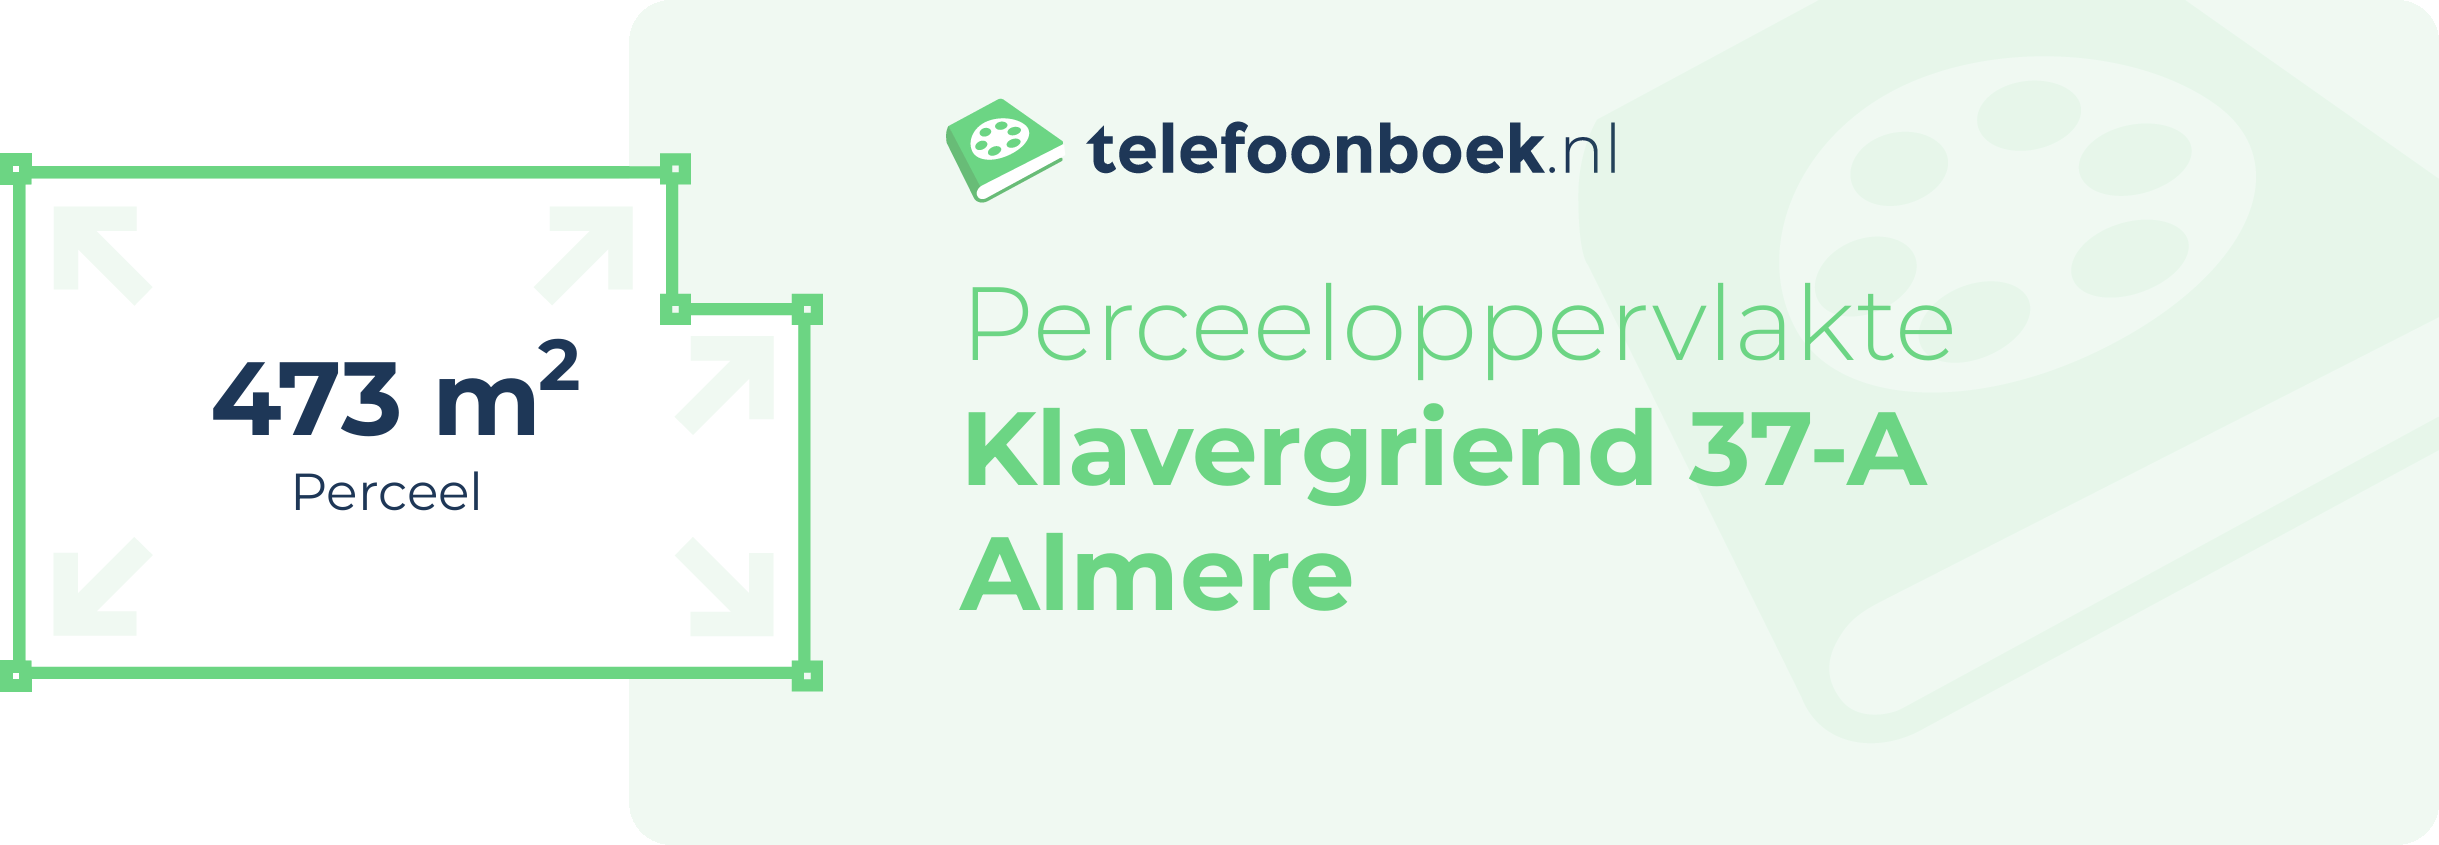 Perceeloppervlakte Klavergriend 37-A Almere